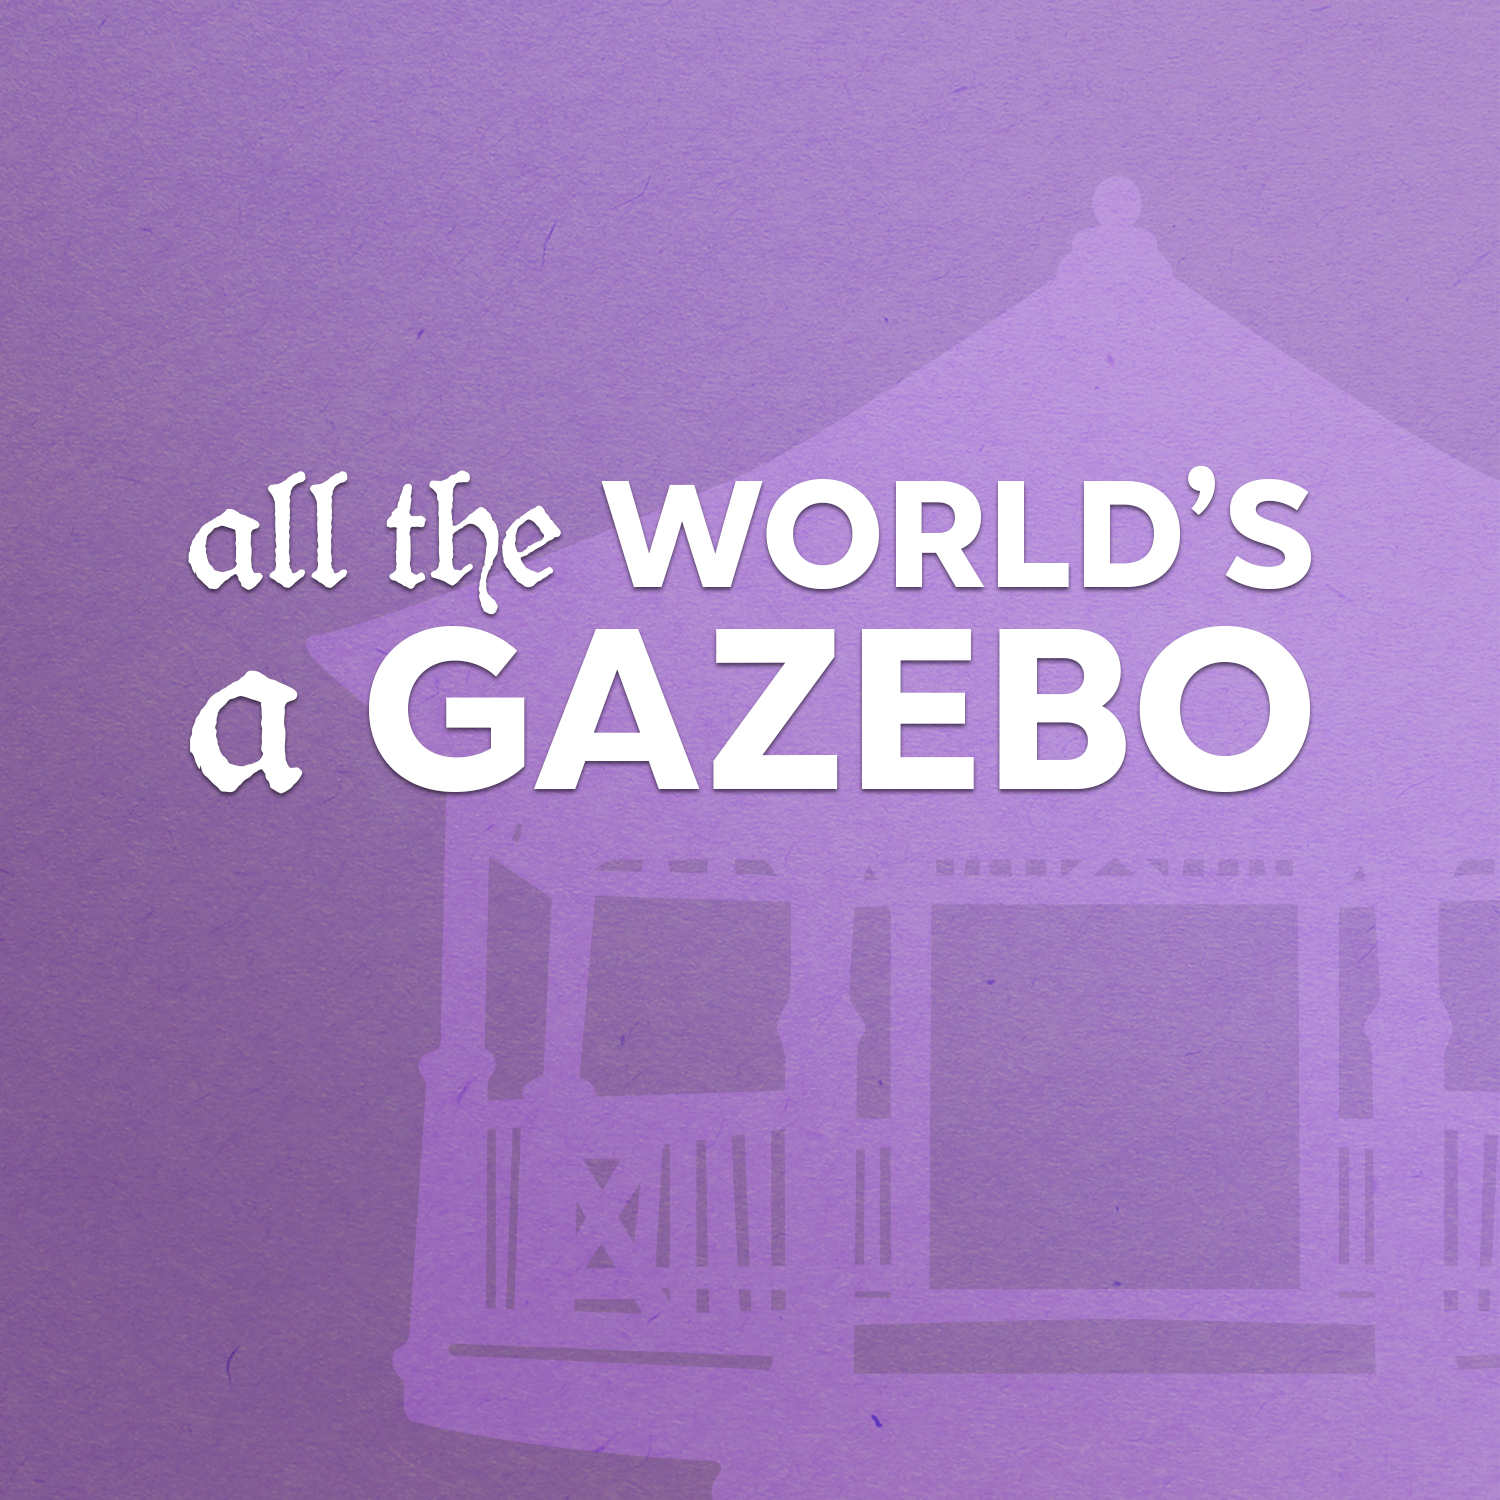 All the World's a Gazebo